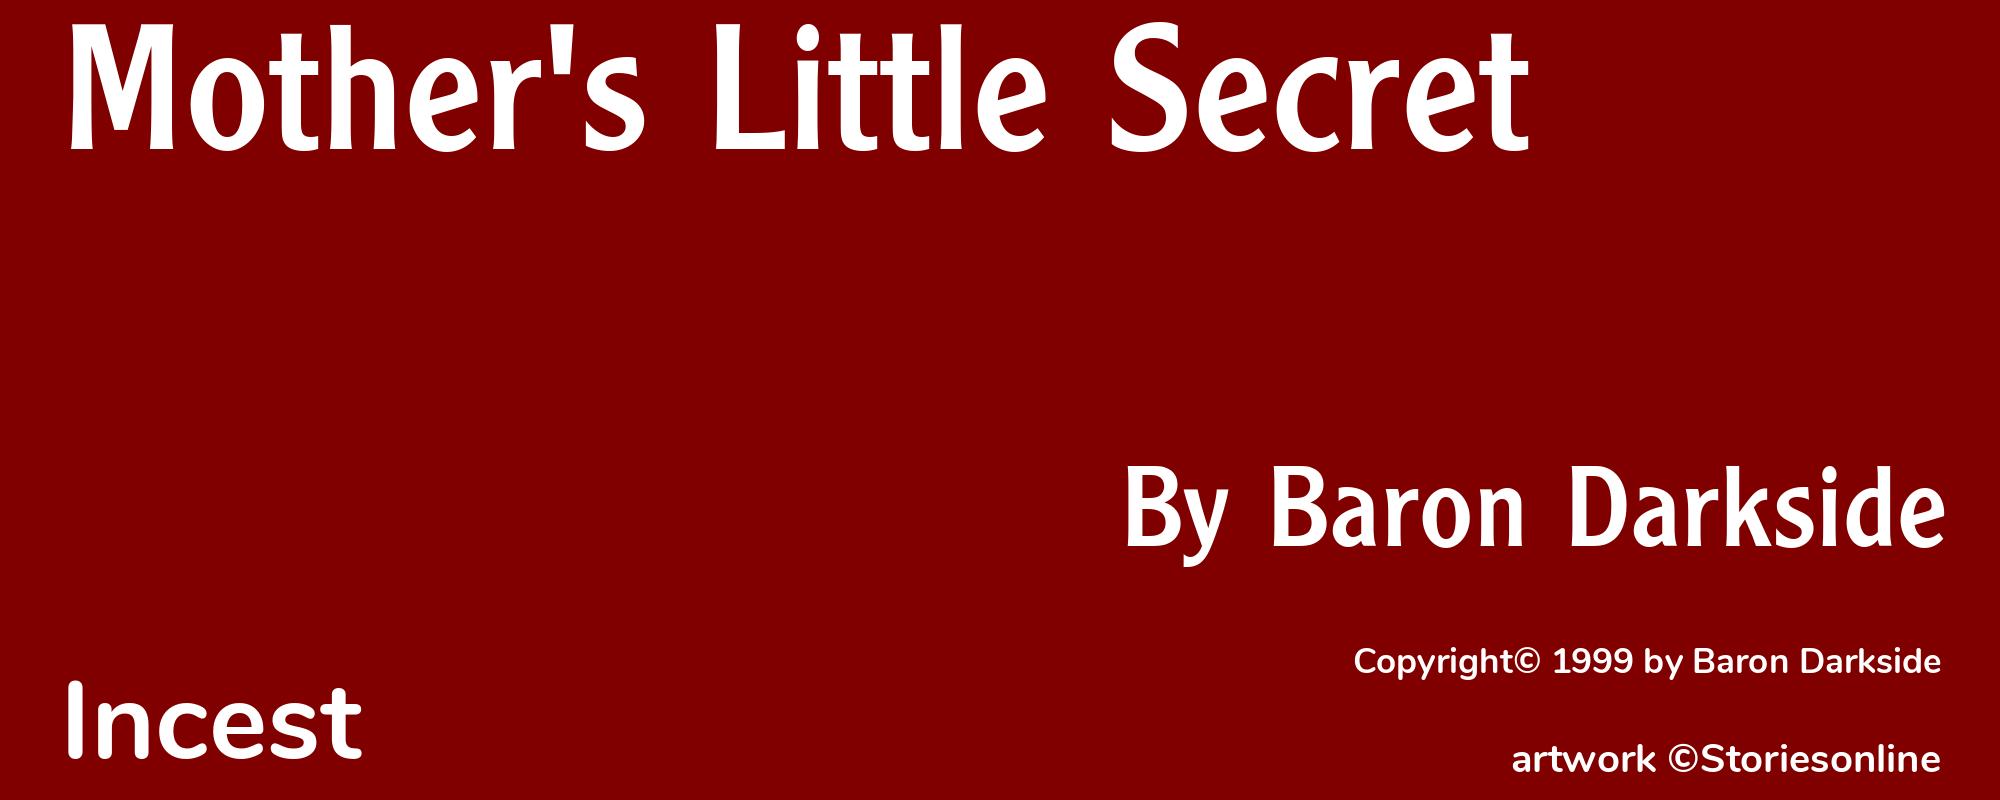 Mother's Little Secret - Cover